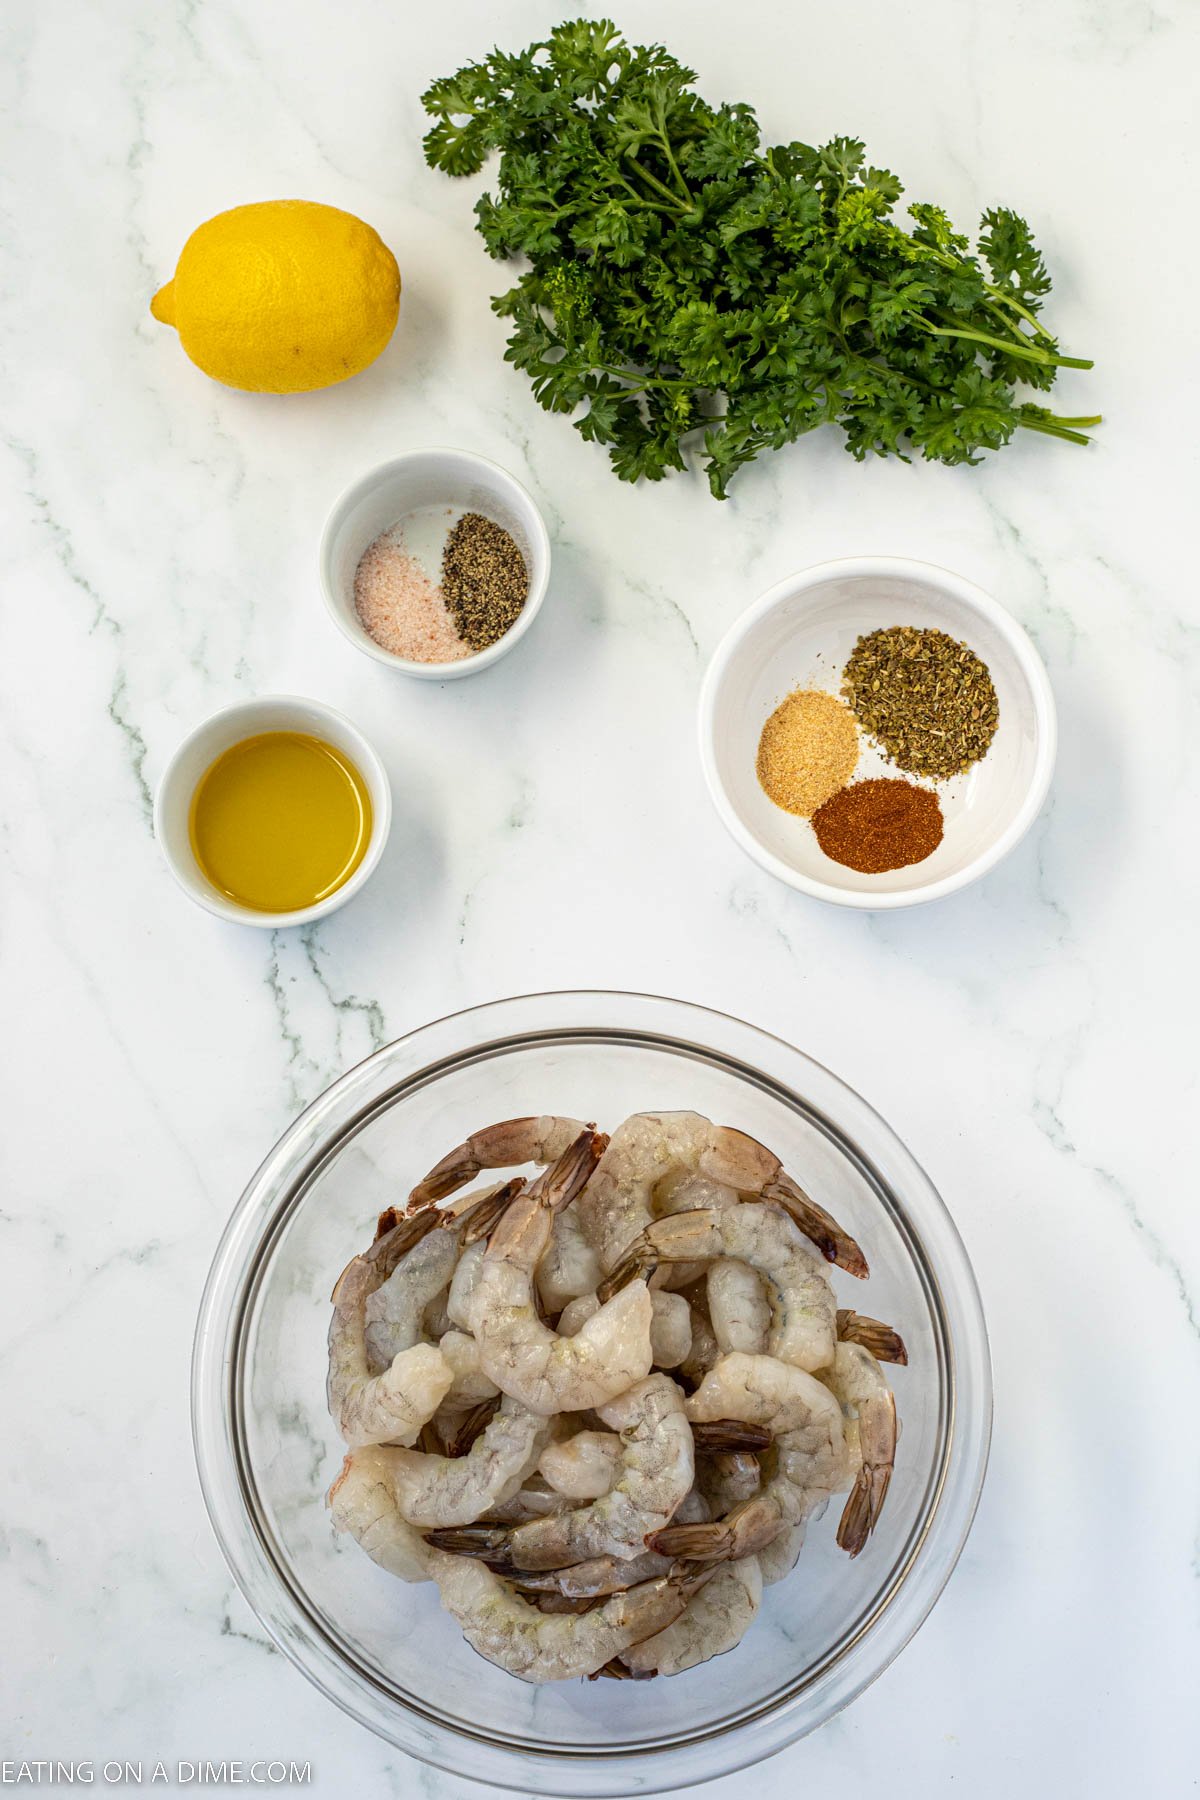 Ingredients for Texas Roadhouse Grilled Shrimp. Large Shrimp, olive oil, salt, pepper, lemon, dried oregano, garlic powder, paprika, parsley, lemon